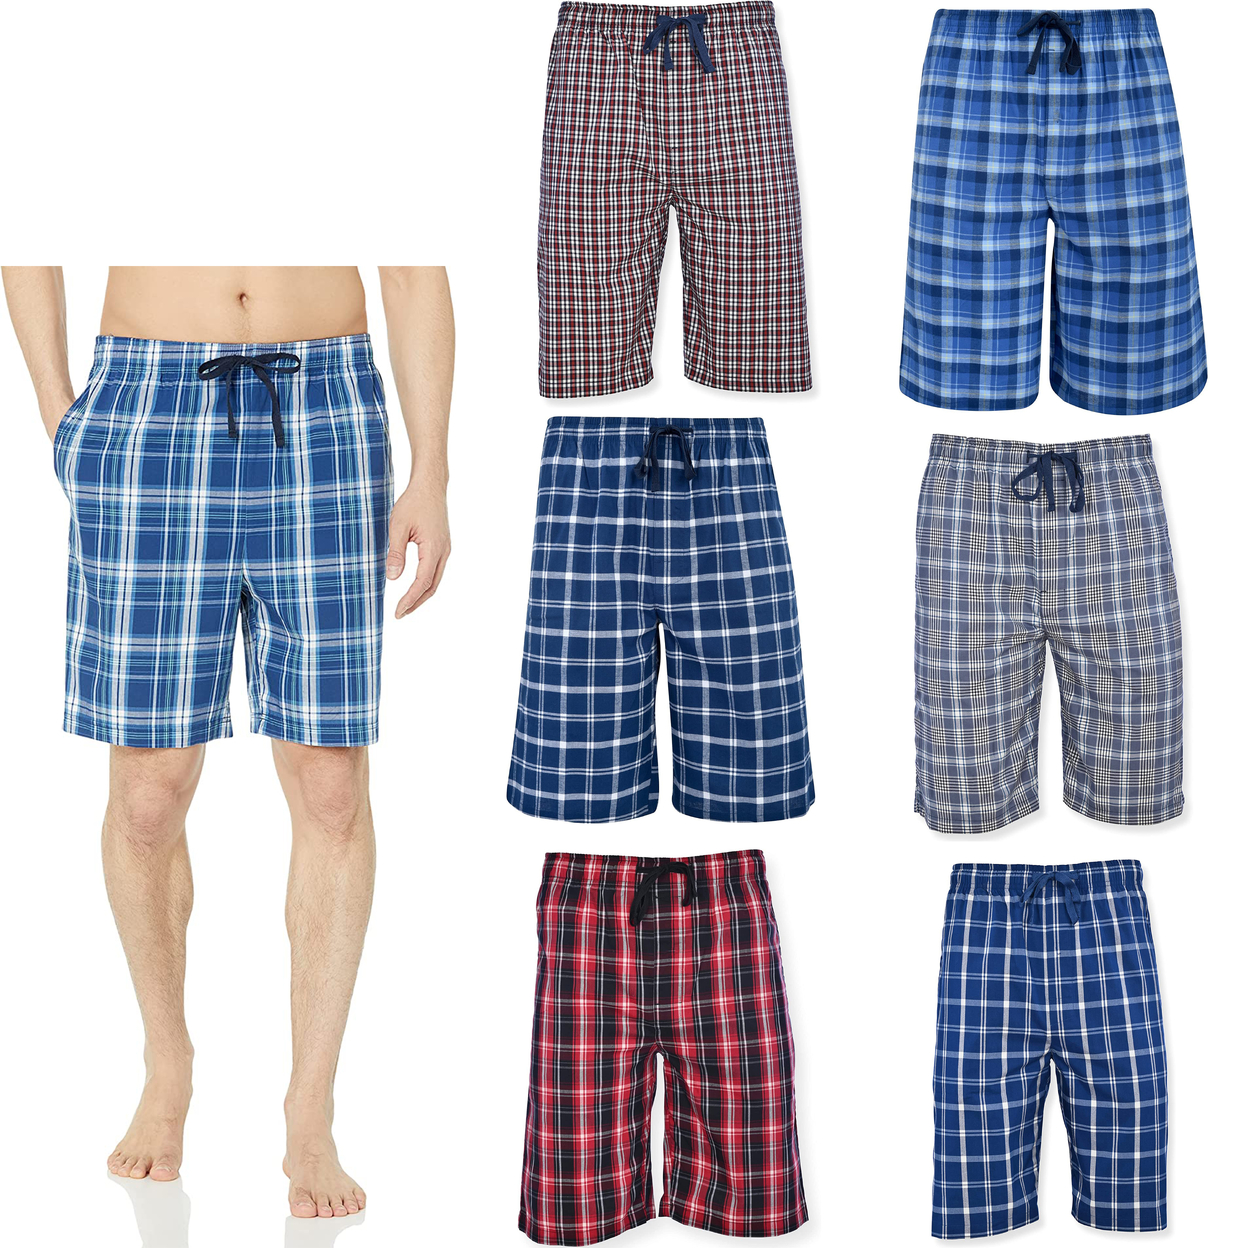 2-Pack: Men's Ultra Soft Plaid Lounge Pajama Sleep Wear Shorts - Black & Grey, Medium